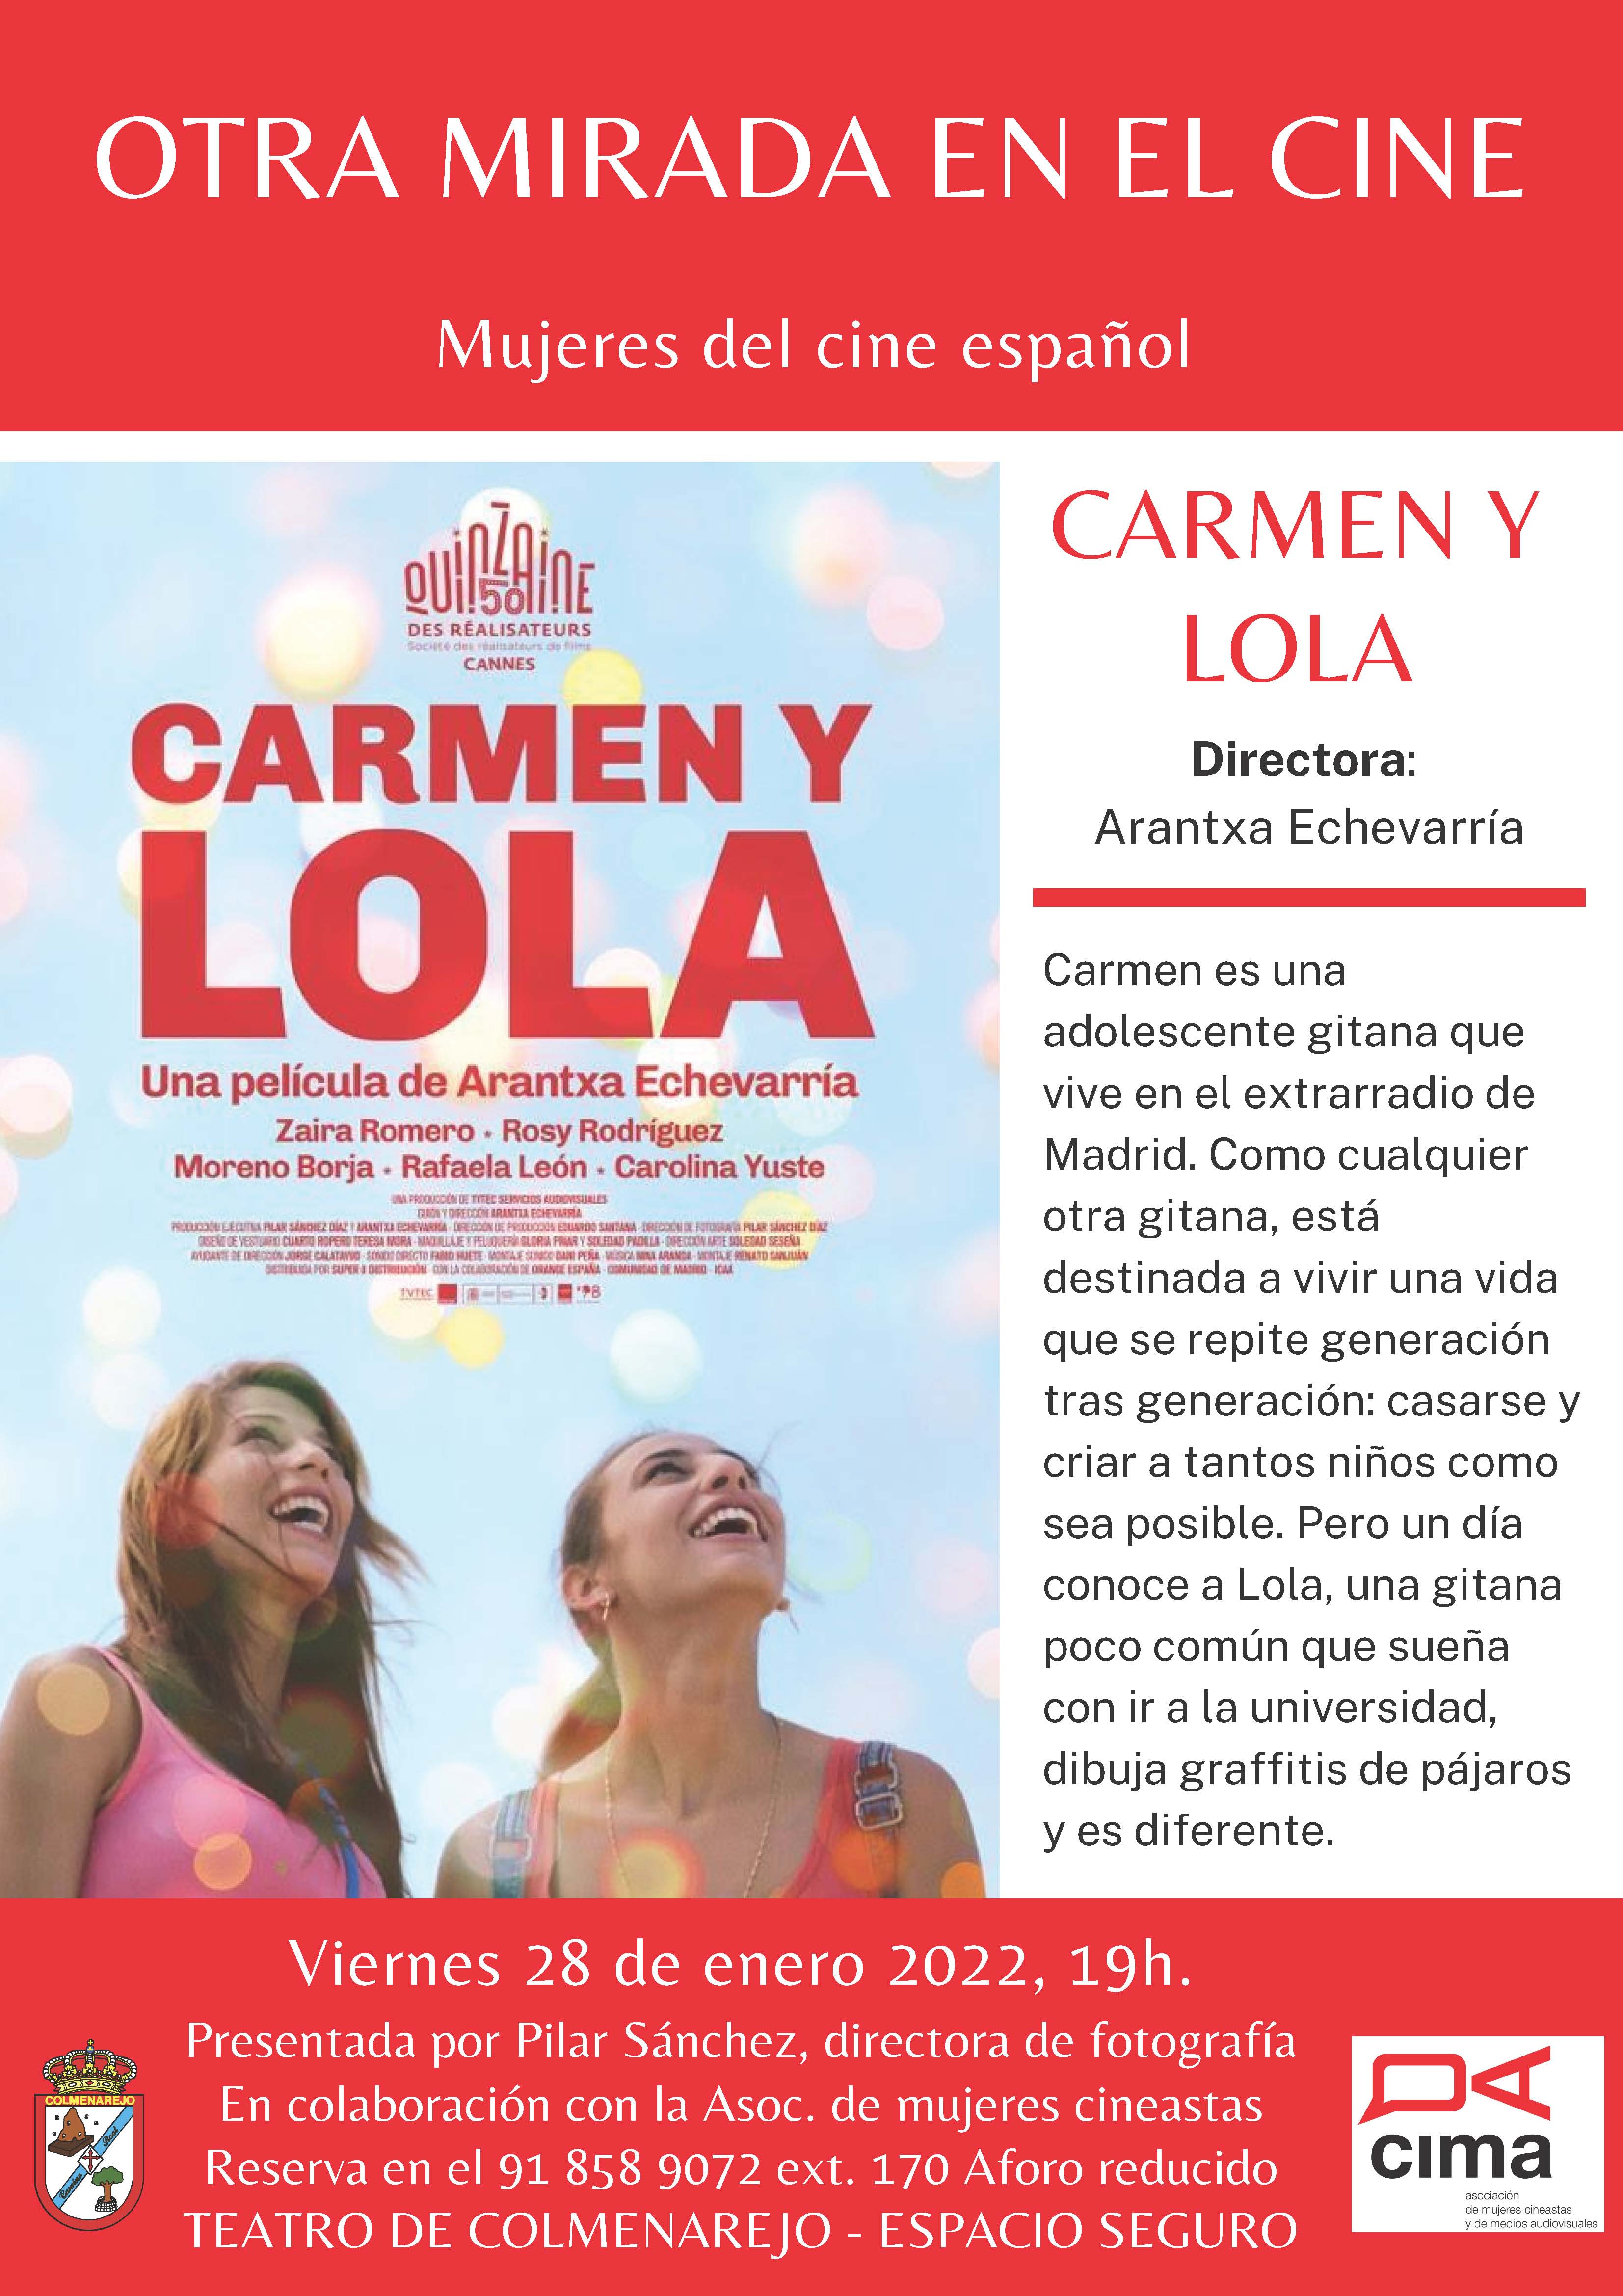 Cine: CARMEN Y LOLA @ Teatro de Colmenarejo